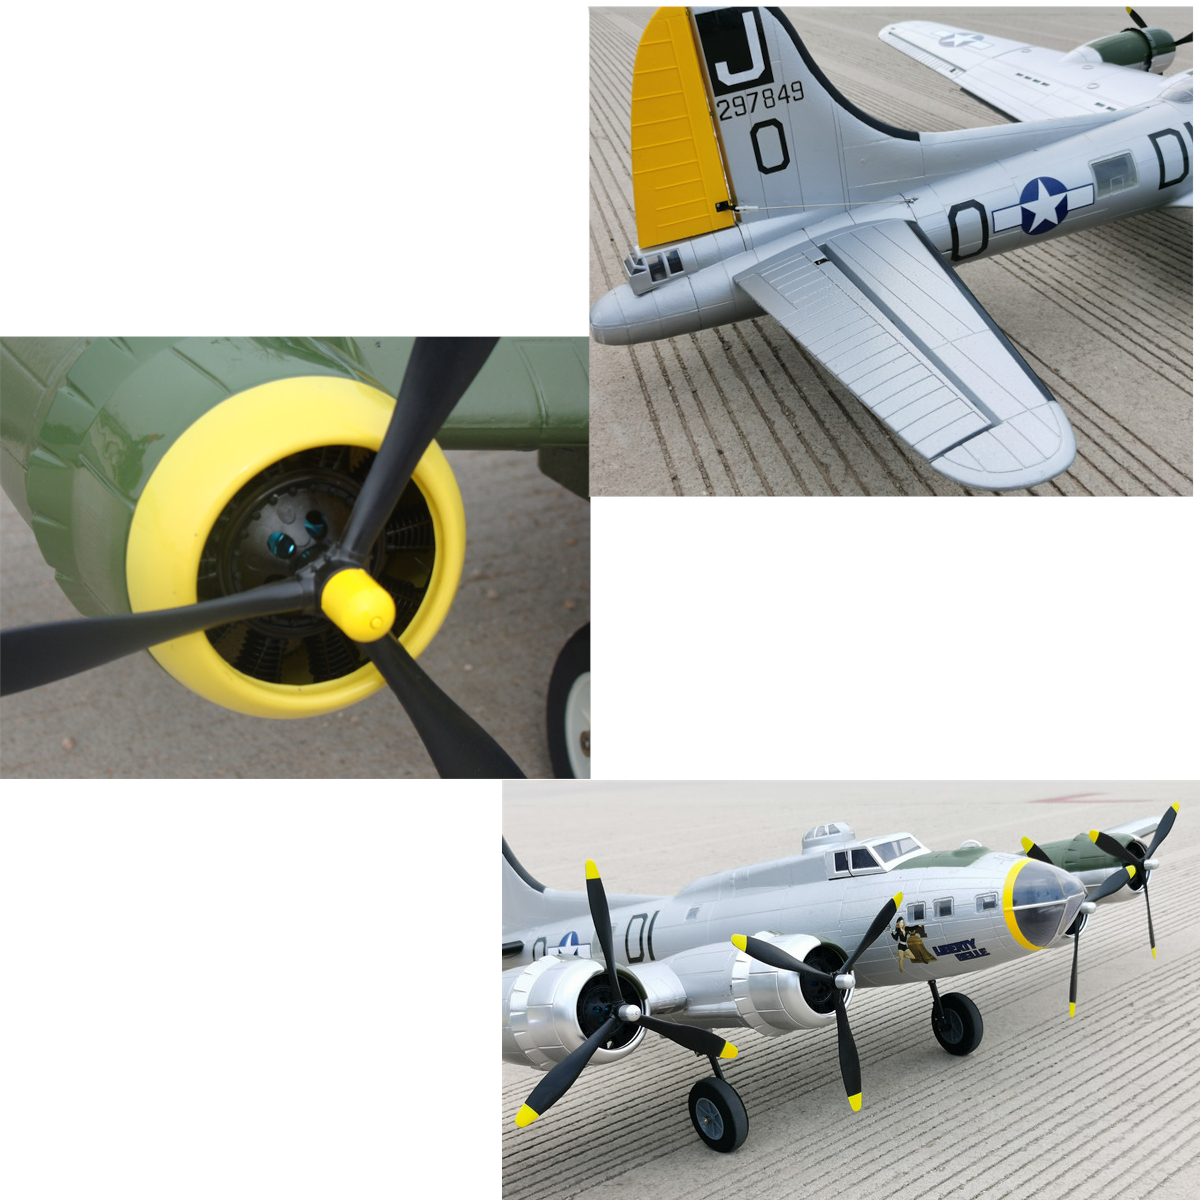 QTMODEL-B-17-Bomber-1830mm-Wingspan-Airplane-EPO-Warbird-RC-Aircraft-KITPNP-1716305-11